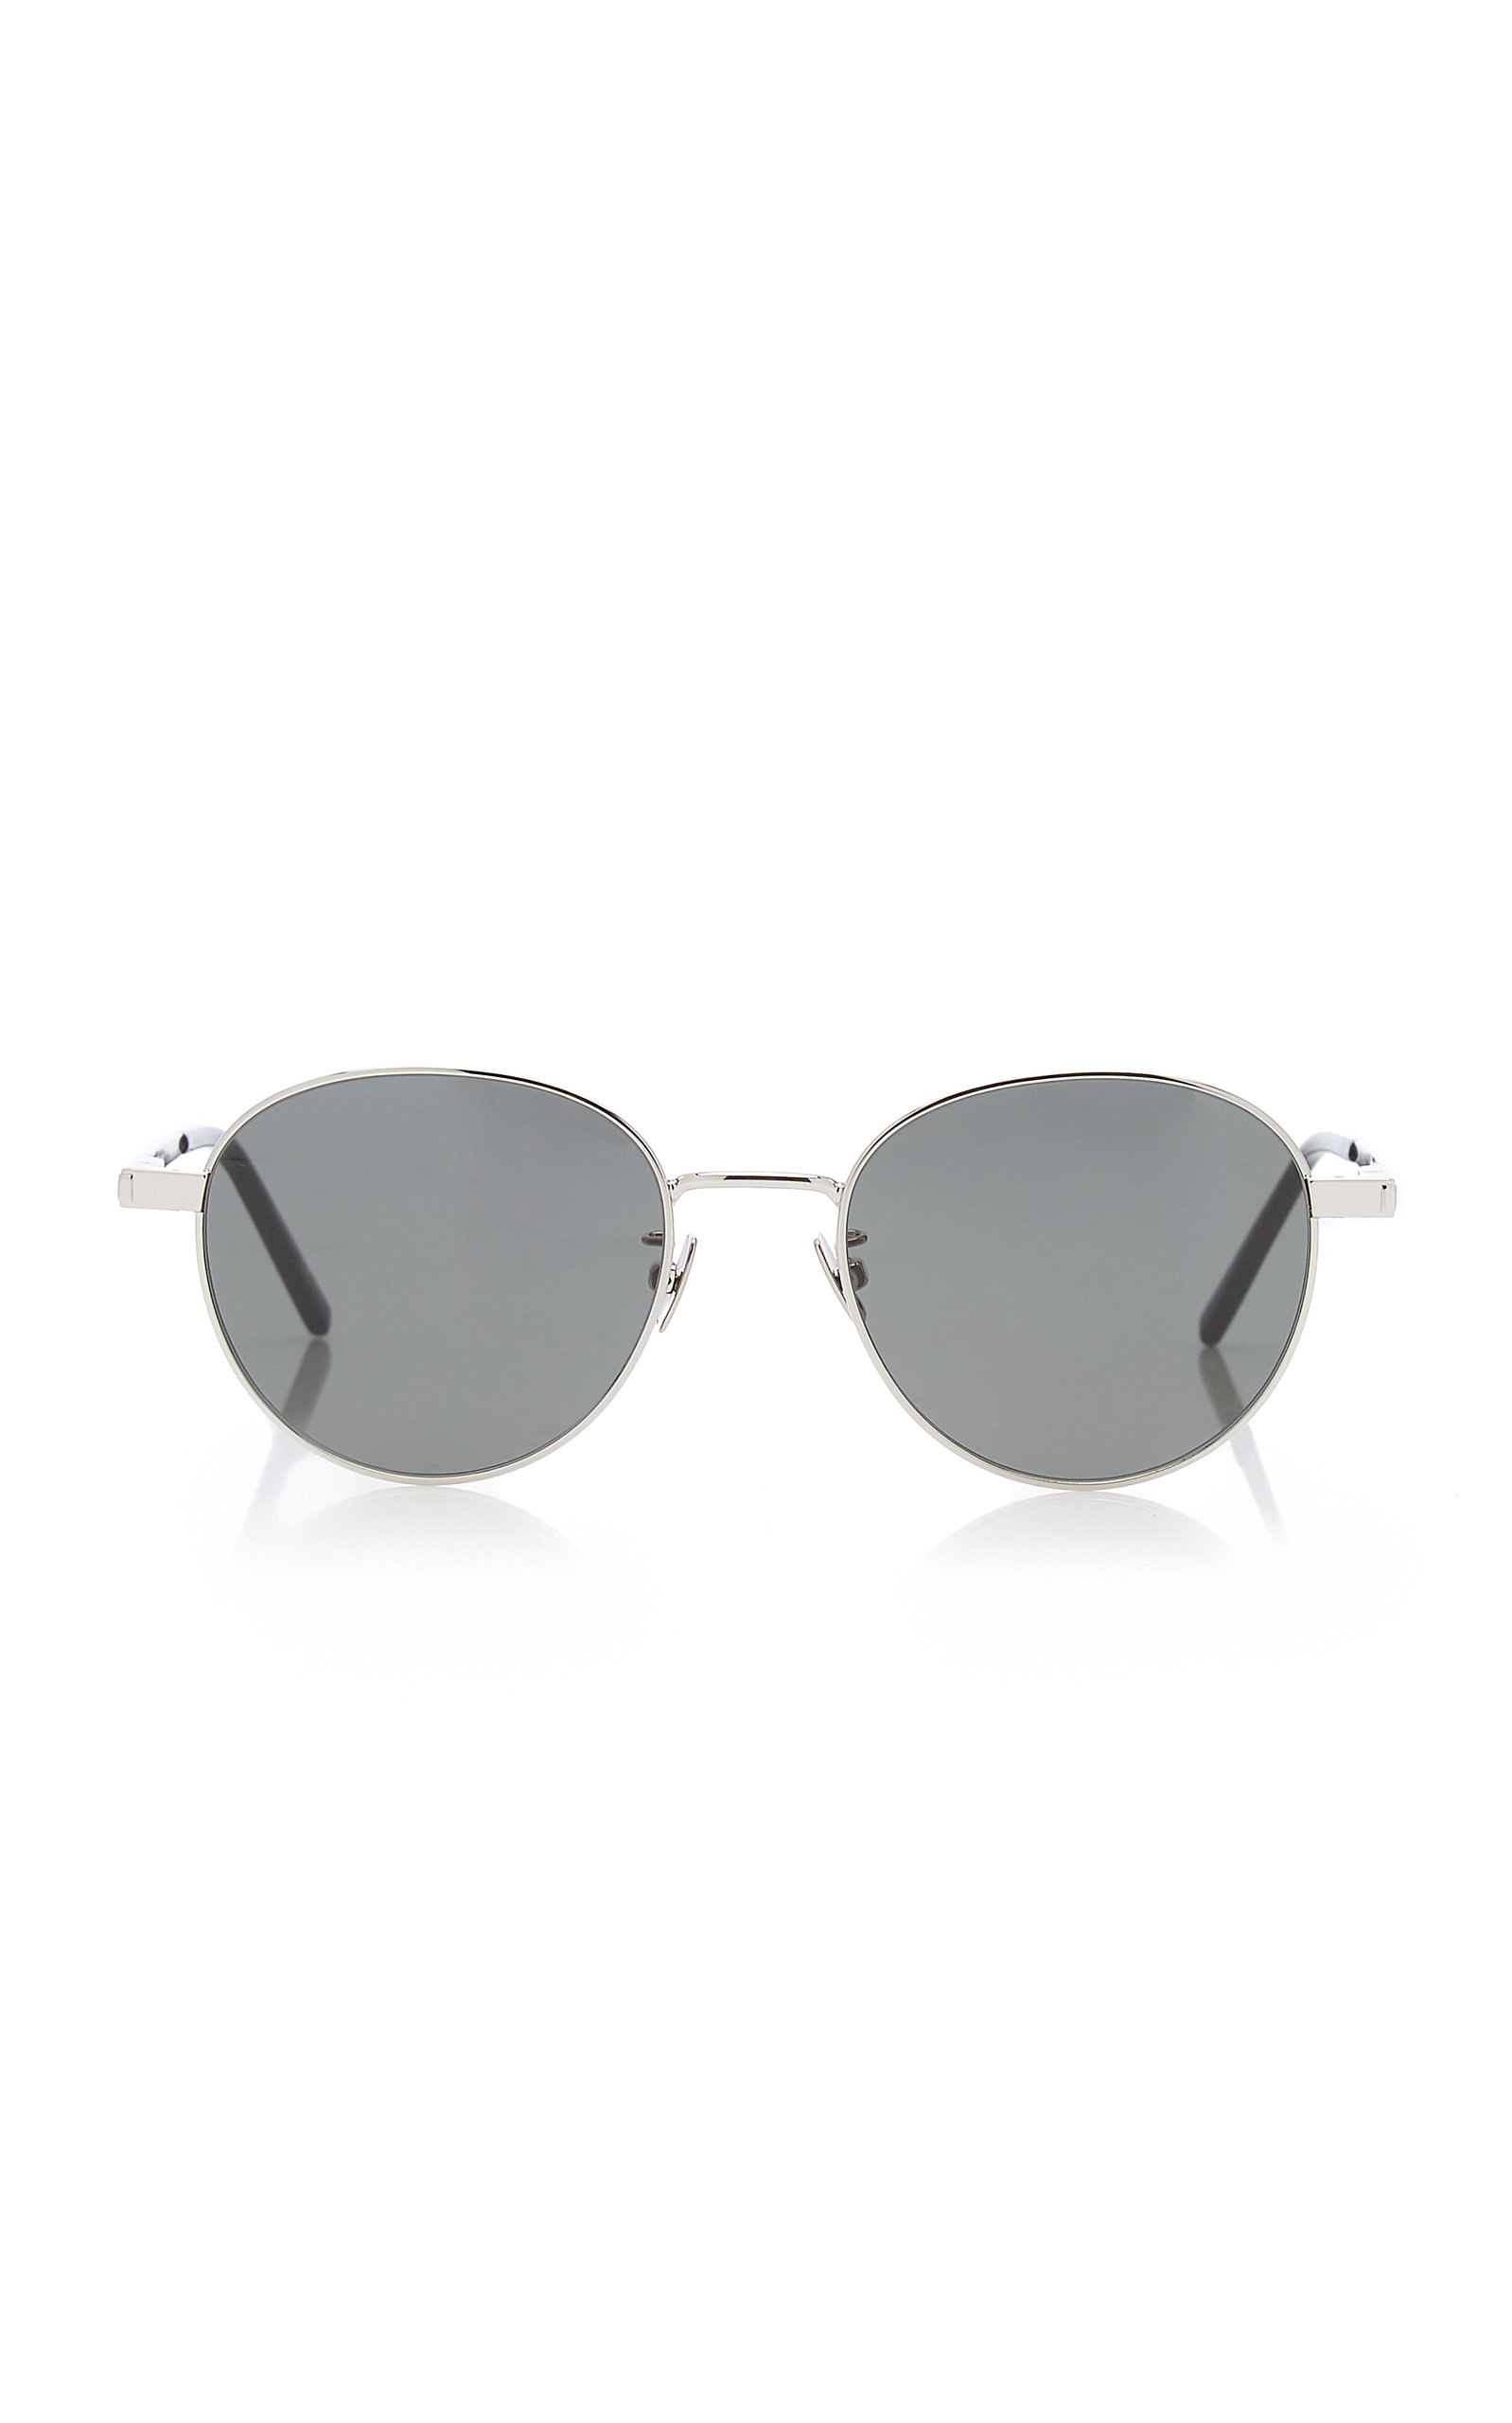 Saint Laurent Women's Round-Frame Metal Sunglasses